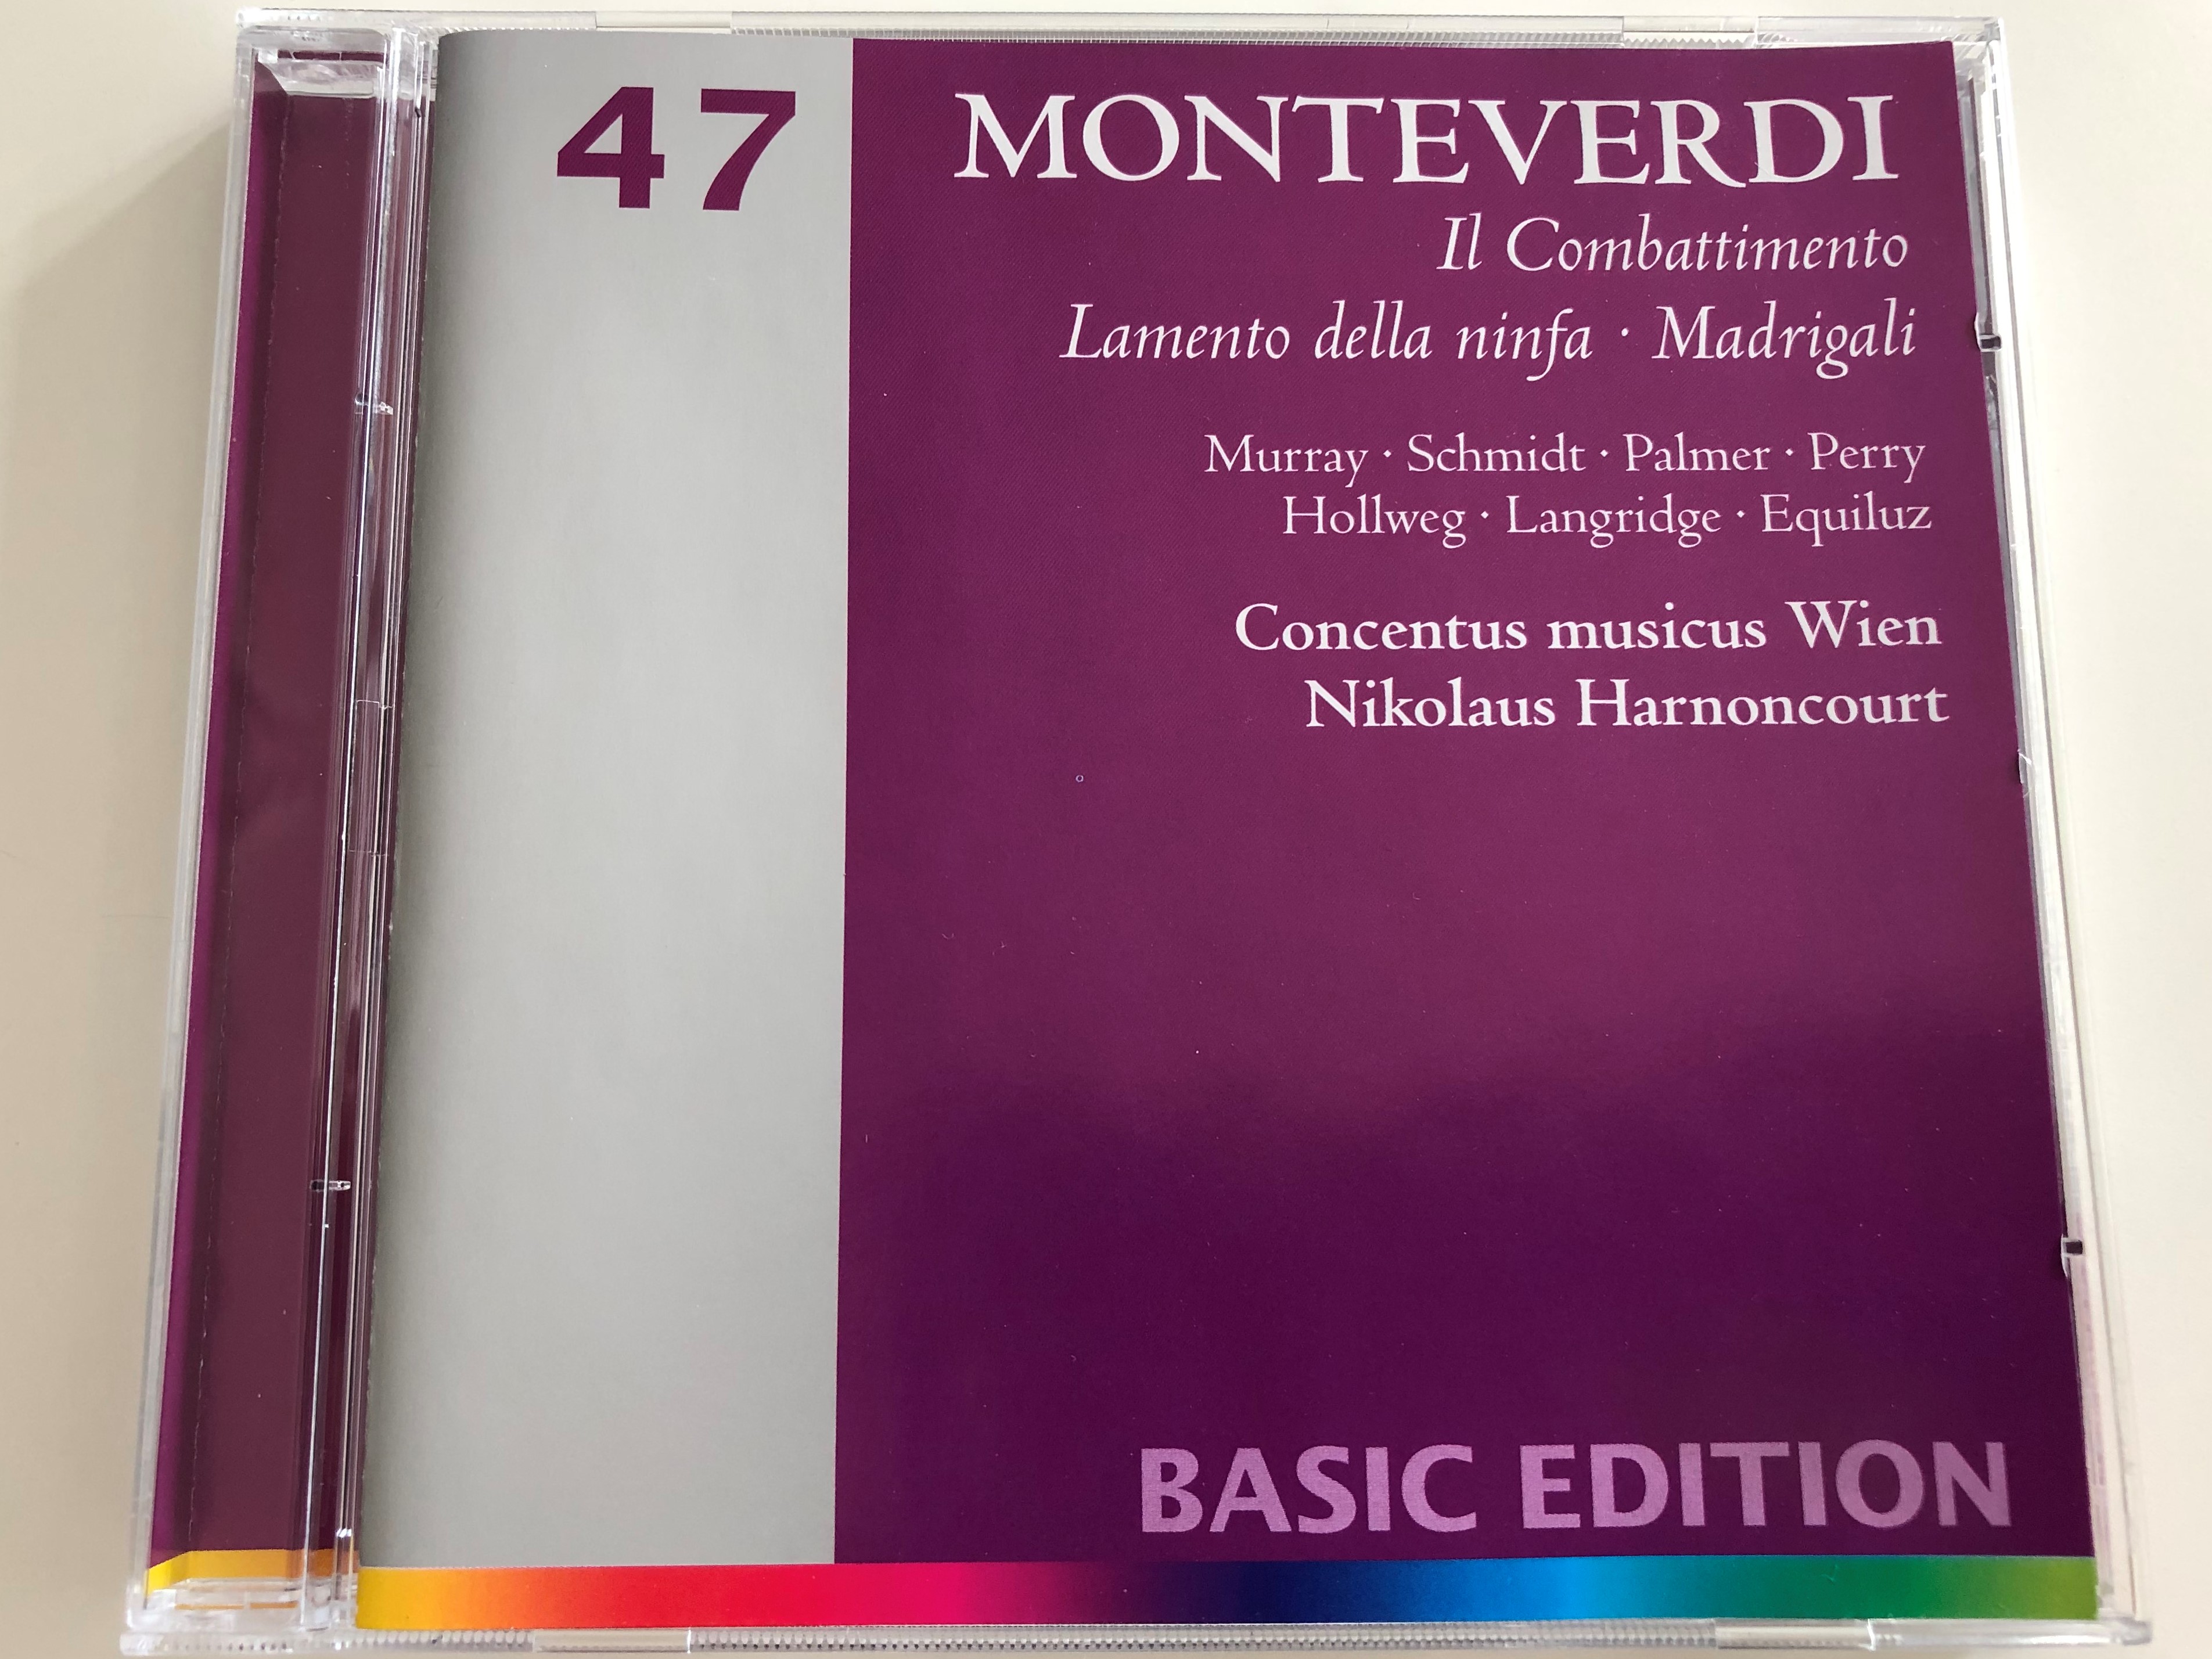 monteverdi-il-combattimento-lamento-della-ninfa-madrigali-murray-schmidt-palmer-perry-hollweg-langridge-equiluz-concentus-musicus-wien-conducted-by-nikolaus-harnoncourt-basic-edition-volume-47-audio-cd-2001-1-.jpg